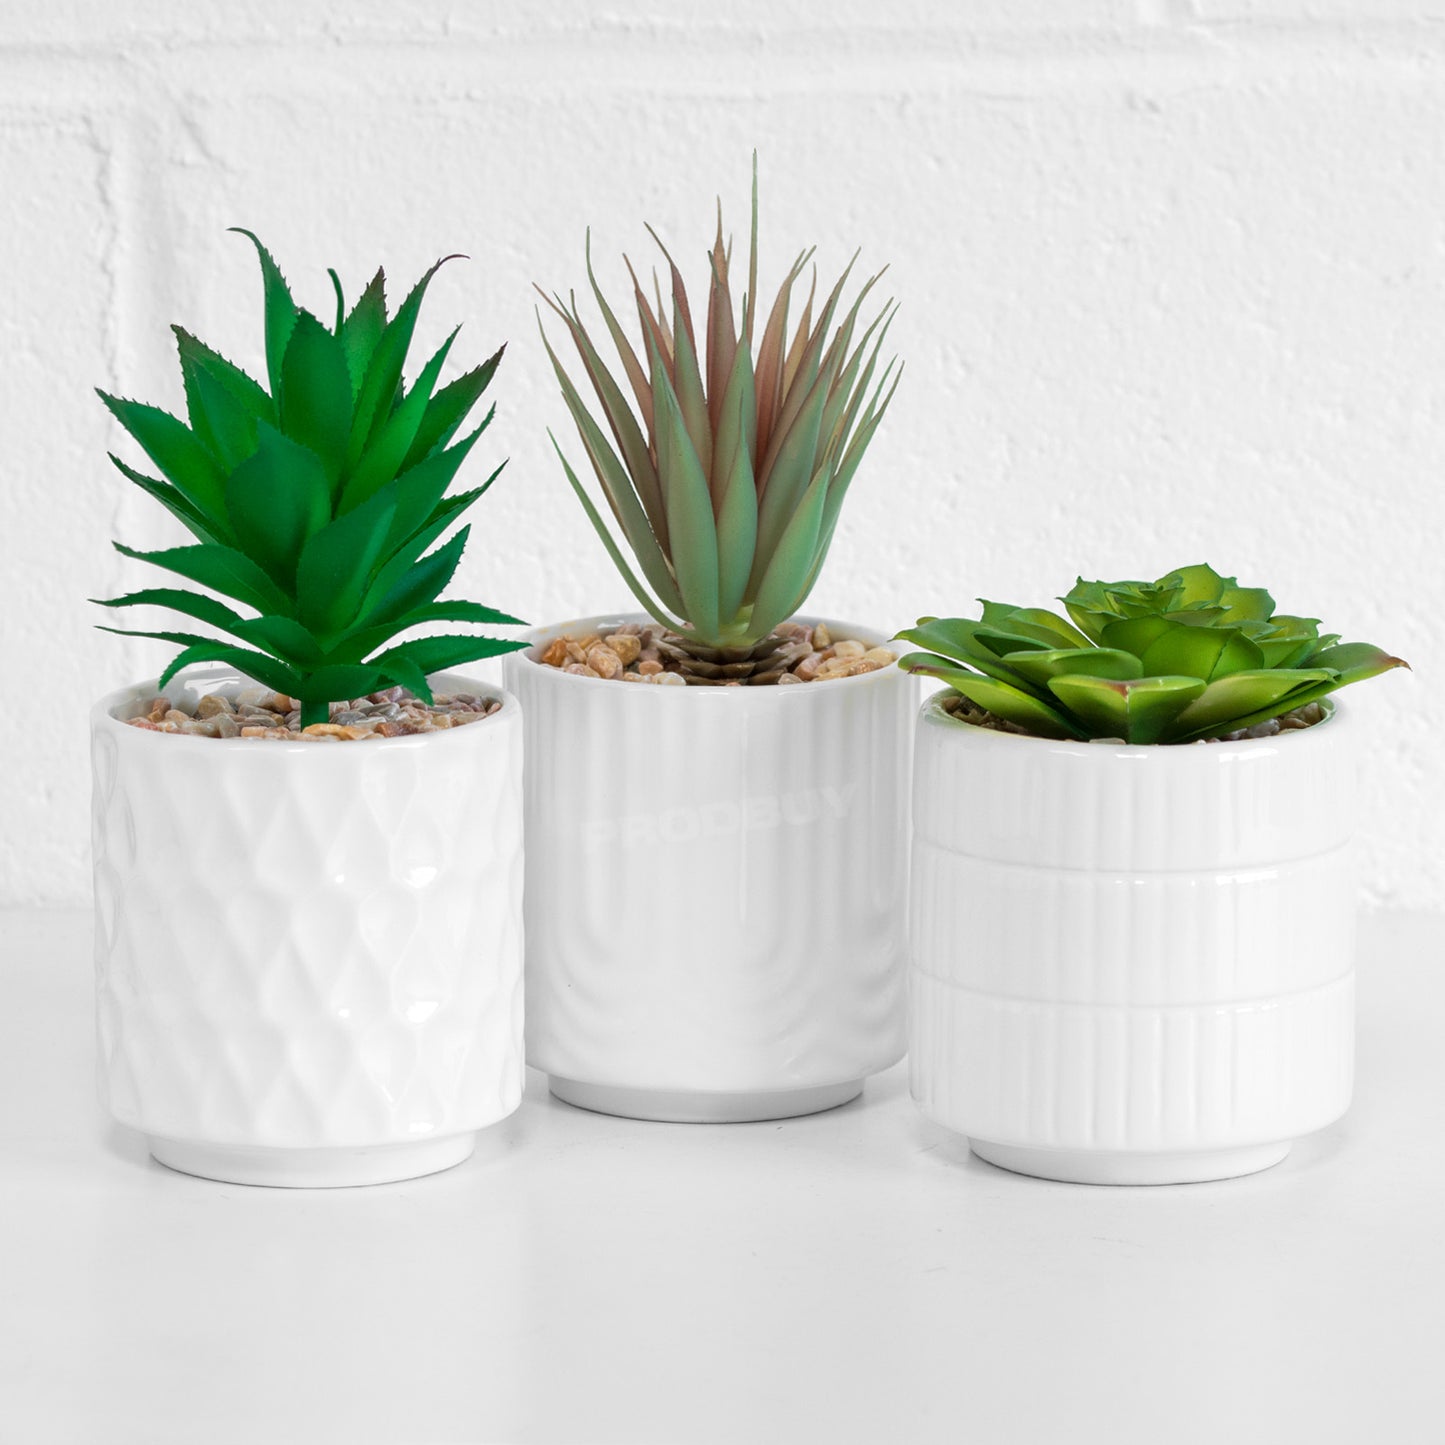 3 x Potted Indoor Artificial Succulent House Plants Plant Pot Home Decorations